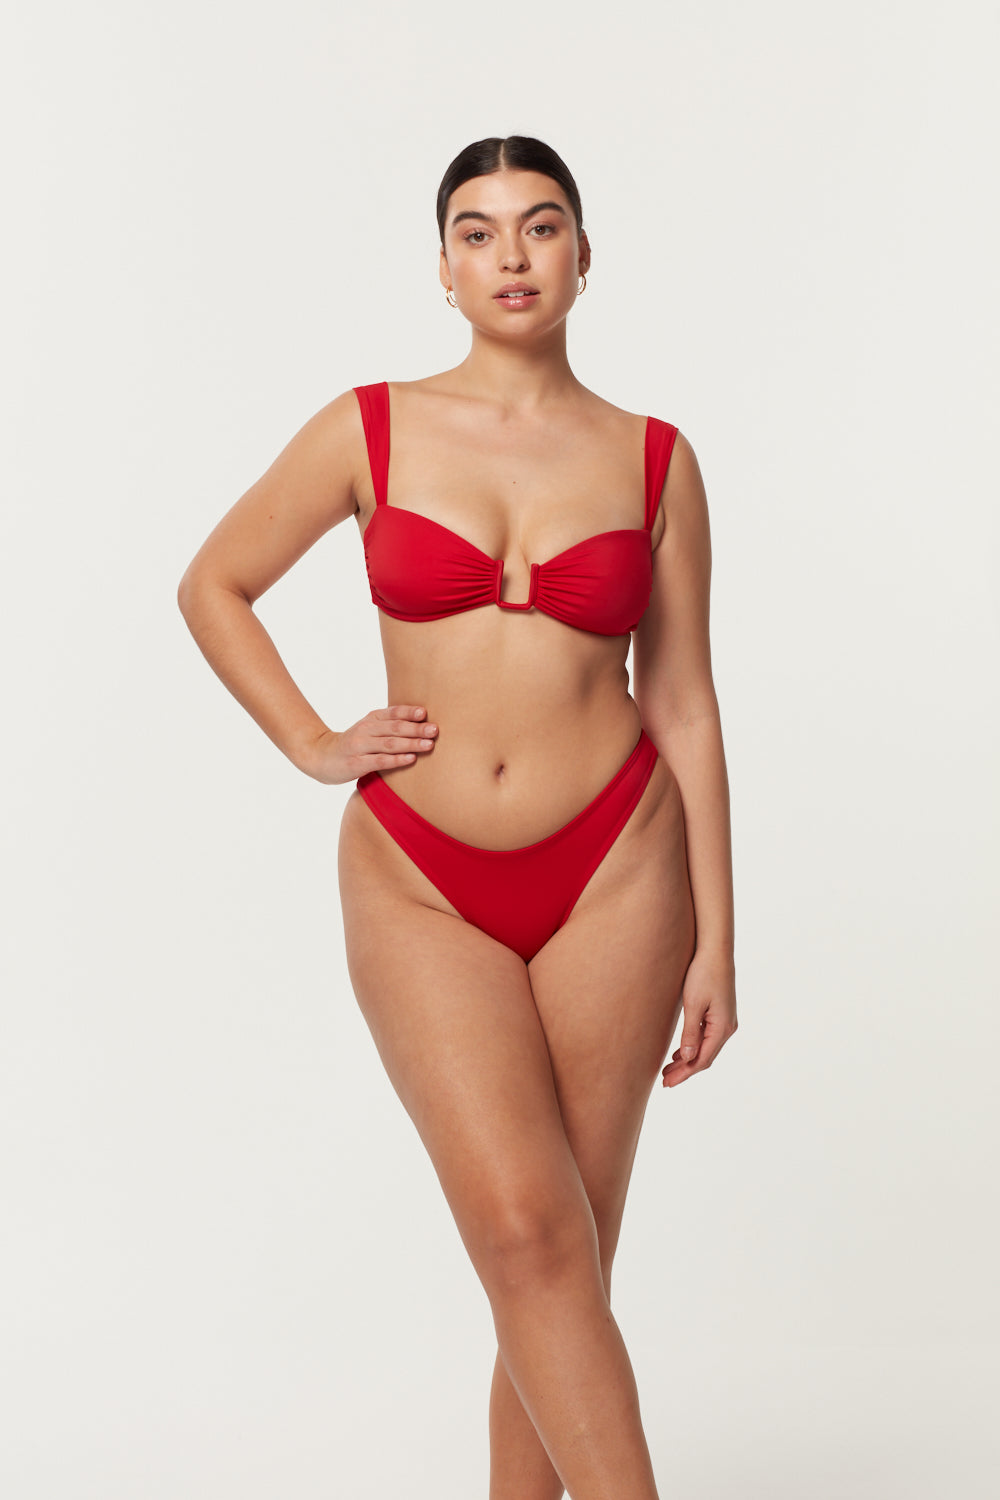 Boux Avenue Tahiti push up bikini top - Red Mix - 34G, £36.00